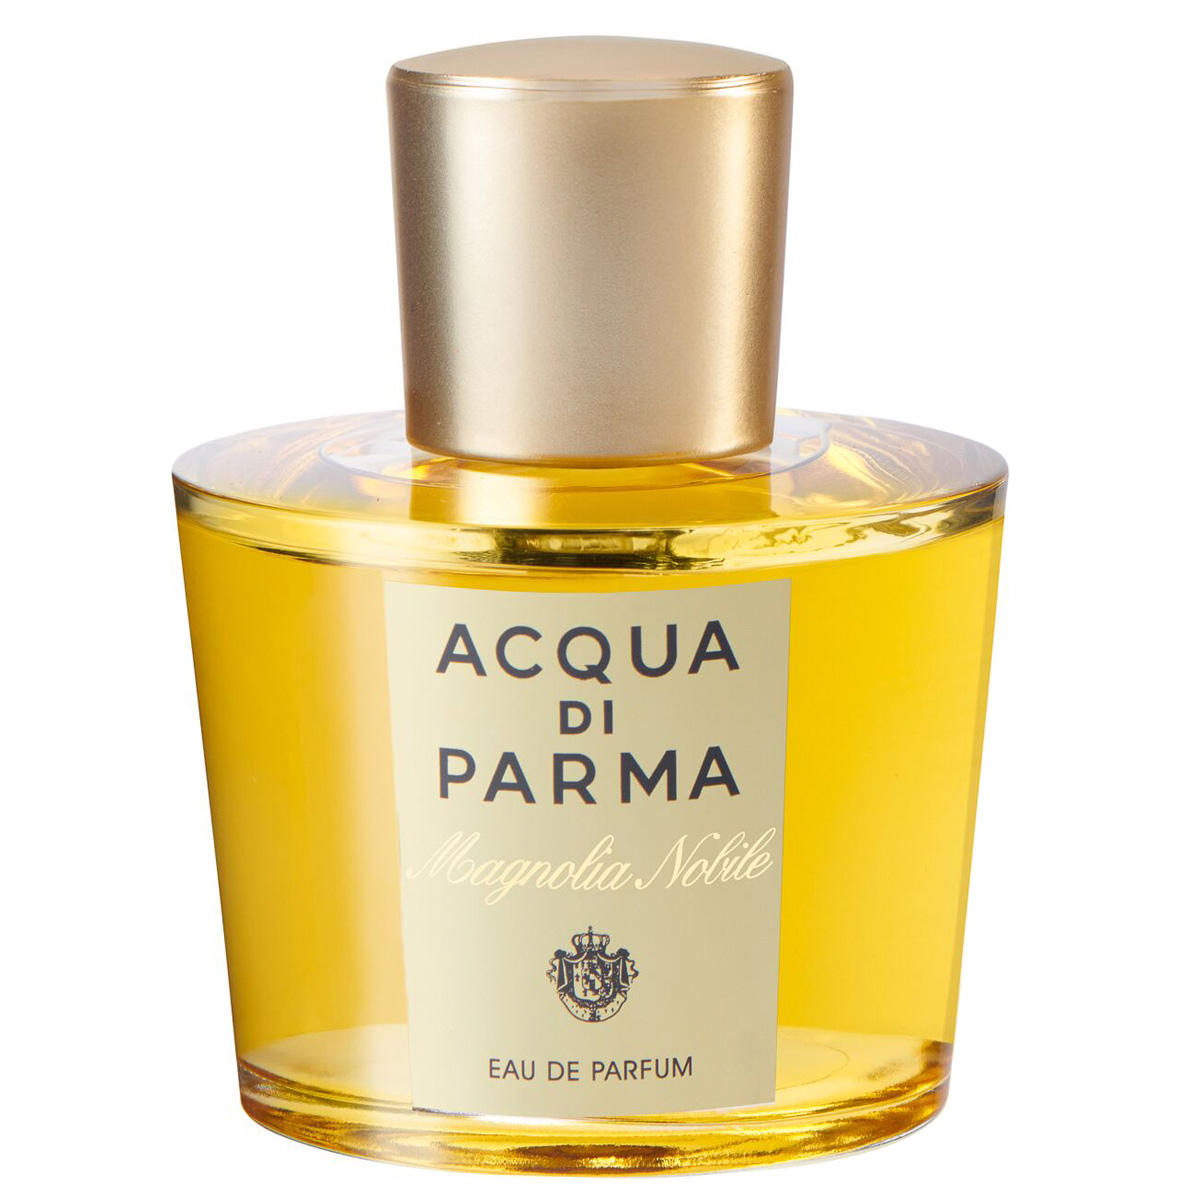 Acqua di Parma Magnolia Nobile Eau de Parfum  - 1